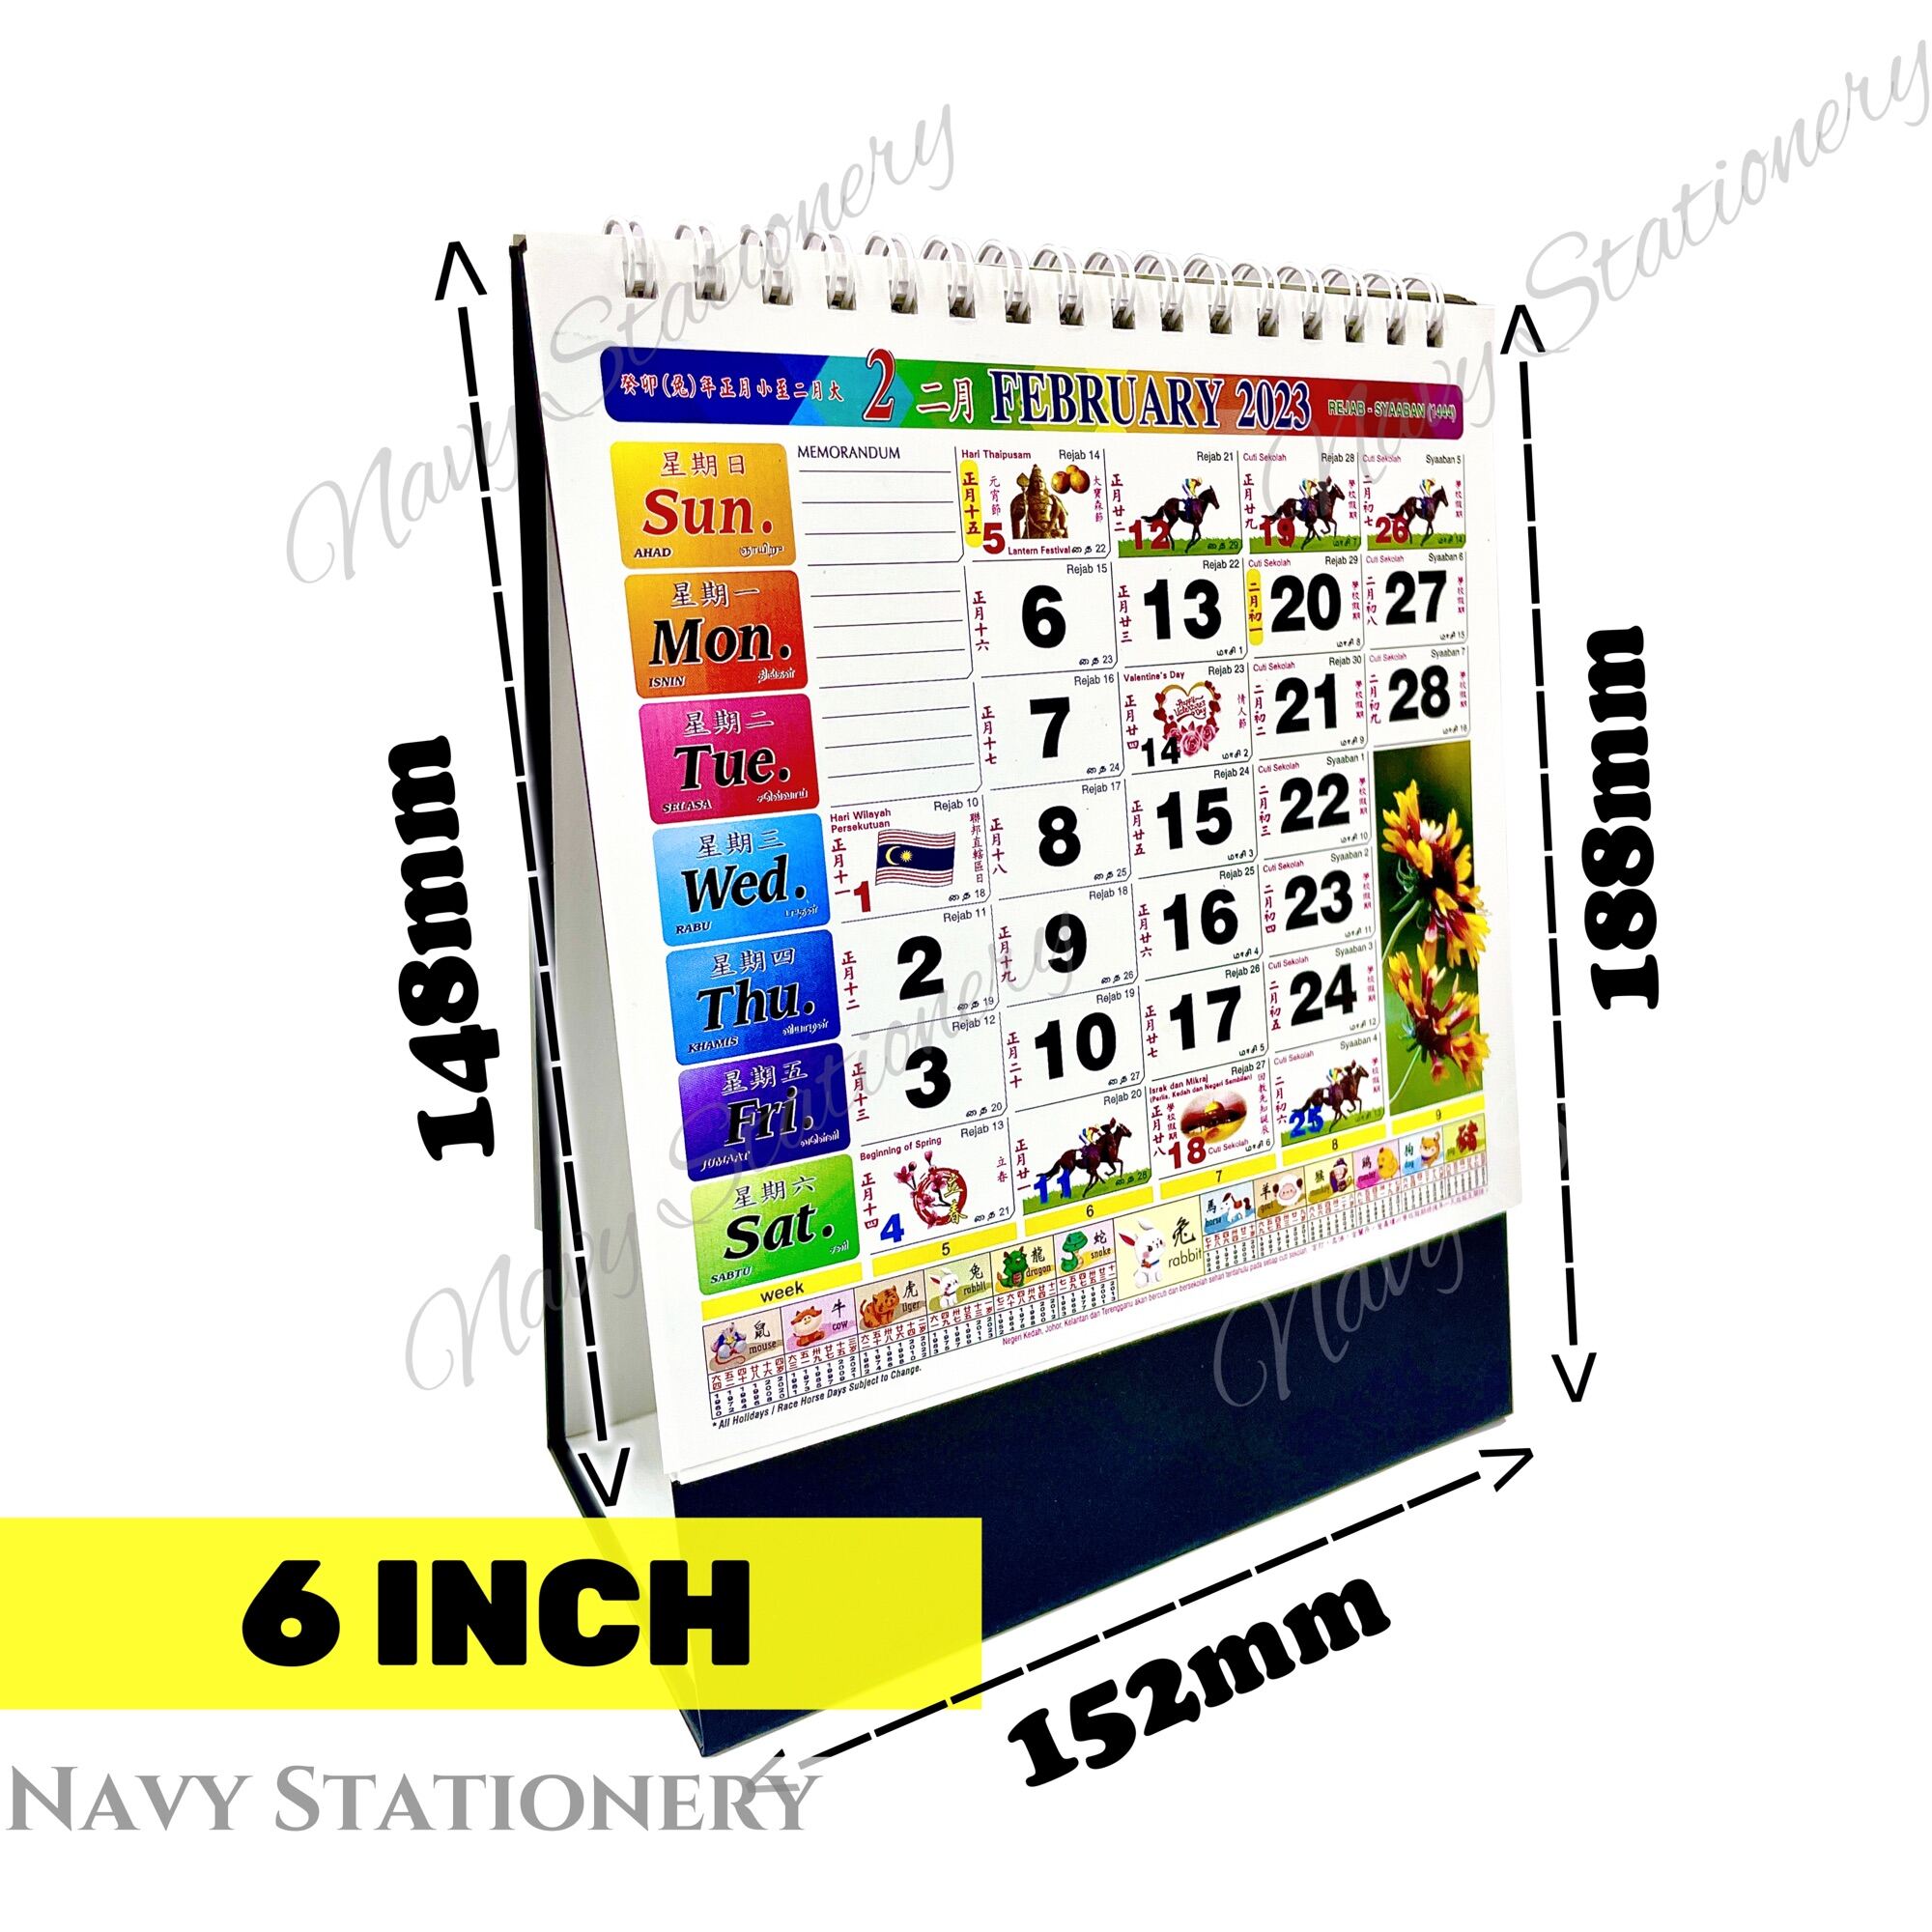 Calendar Pen – Exacmust (M) Sdn. Bhd.